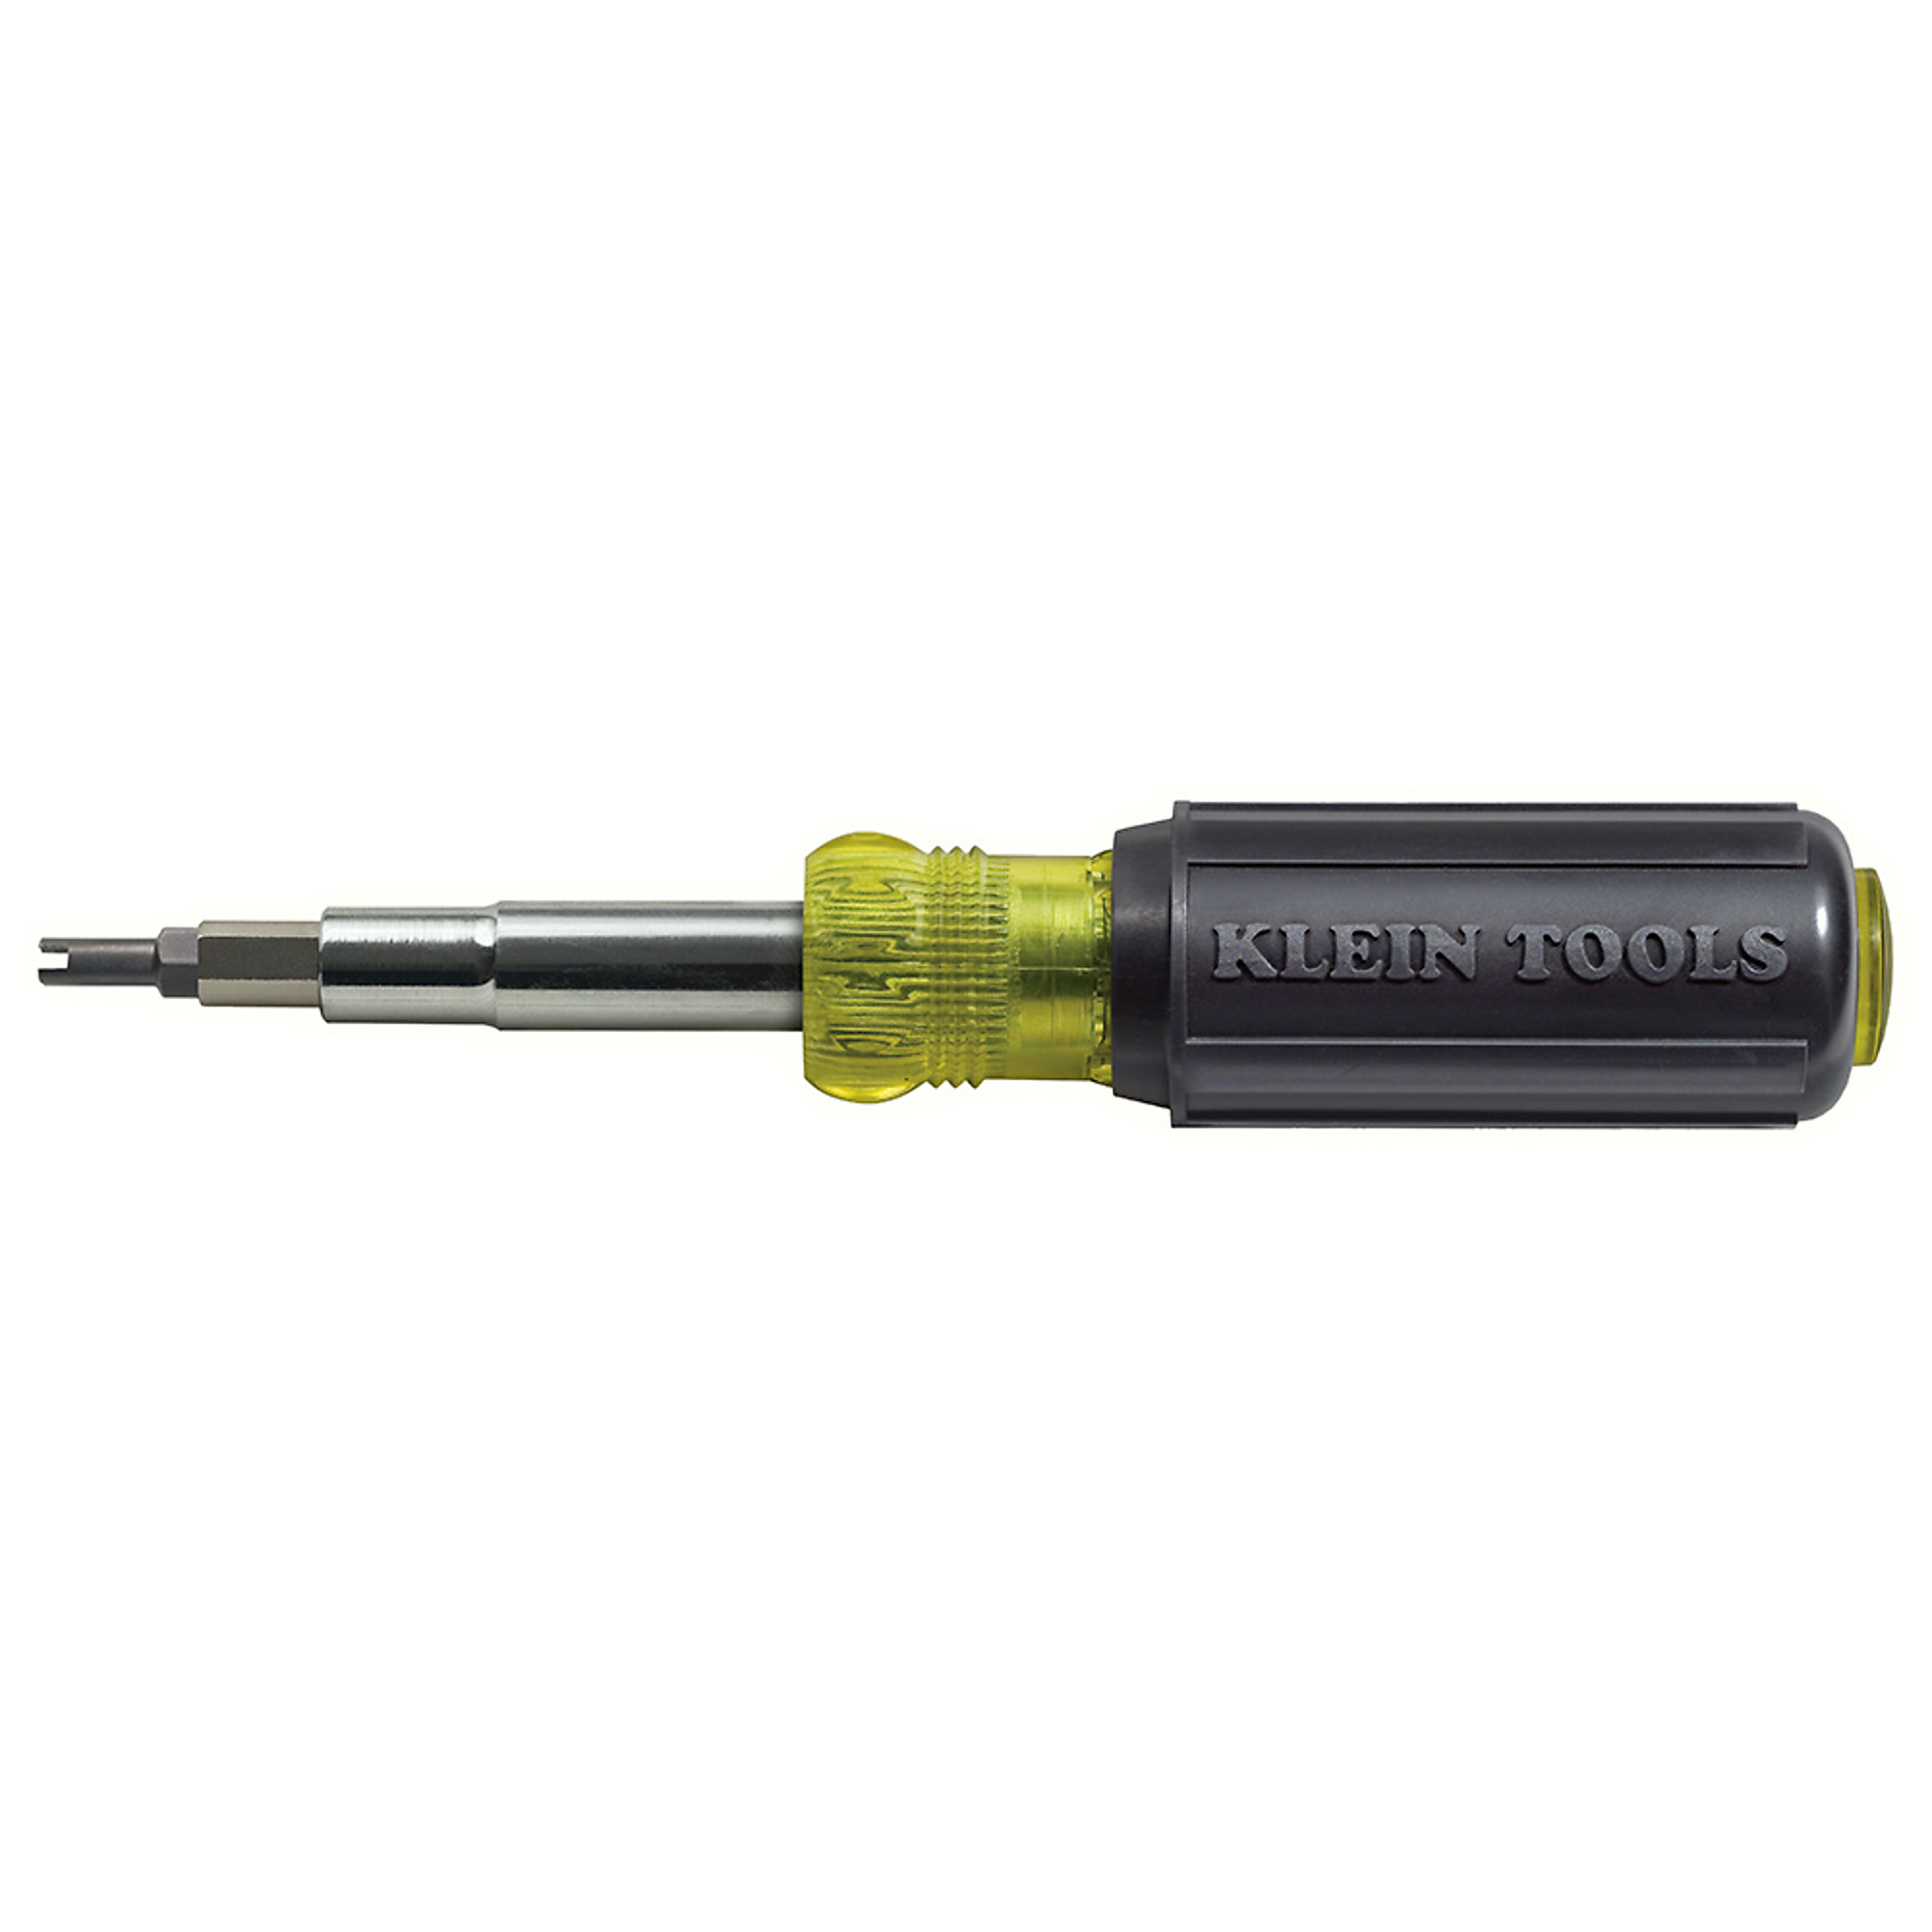 Klein Tools, Nut Screwdriver Valve Core Bit, Drive Type Combination, Model 32527